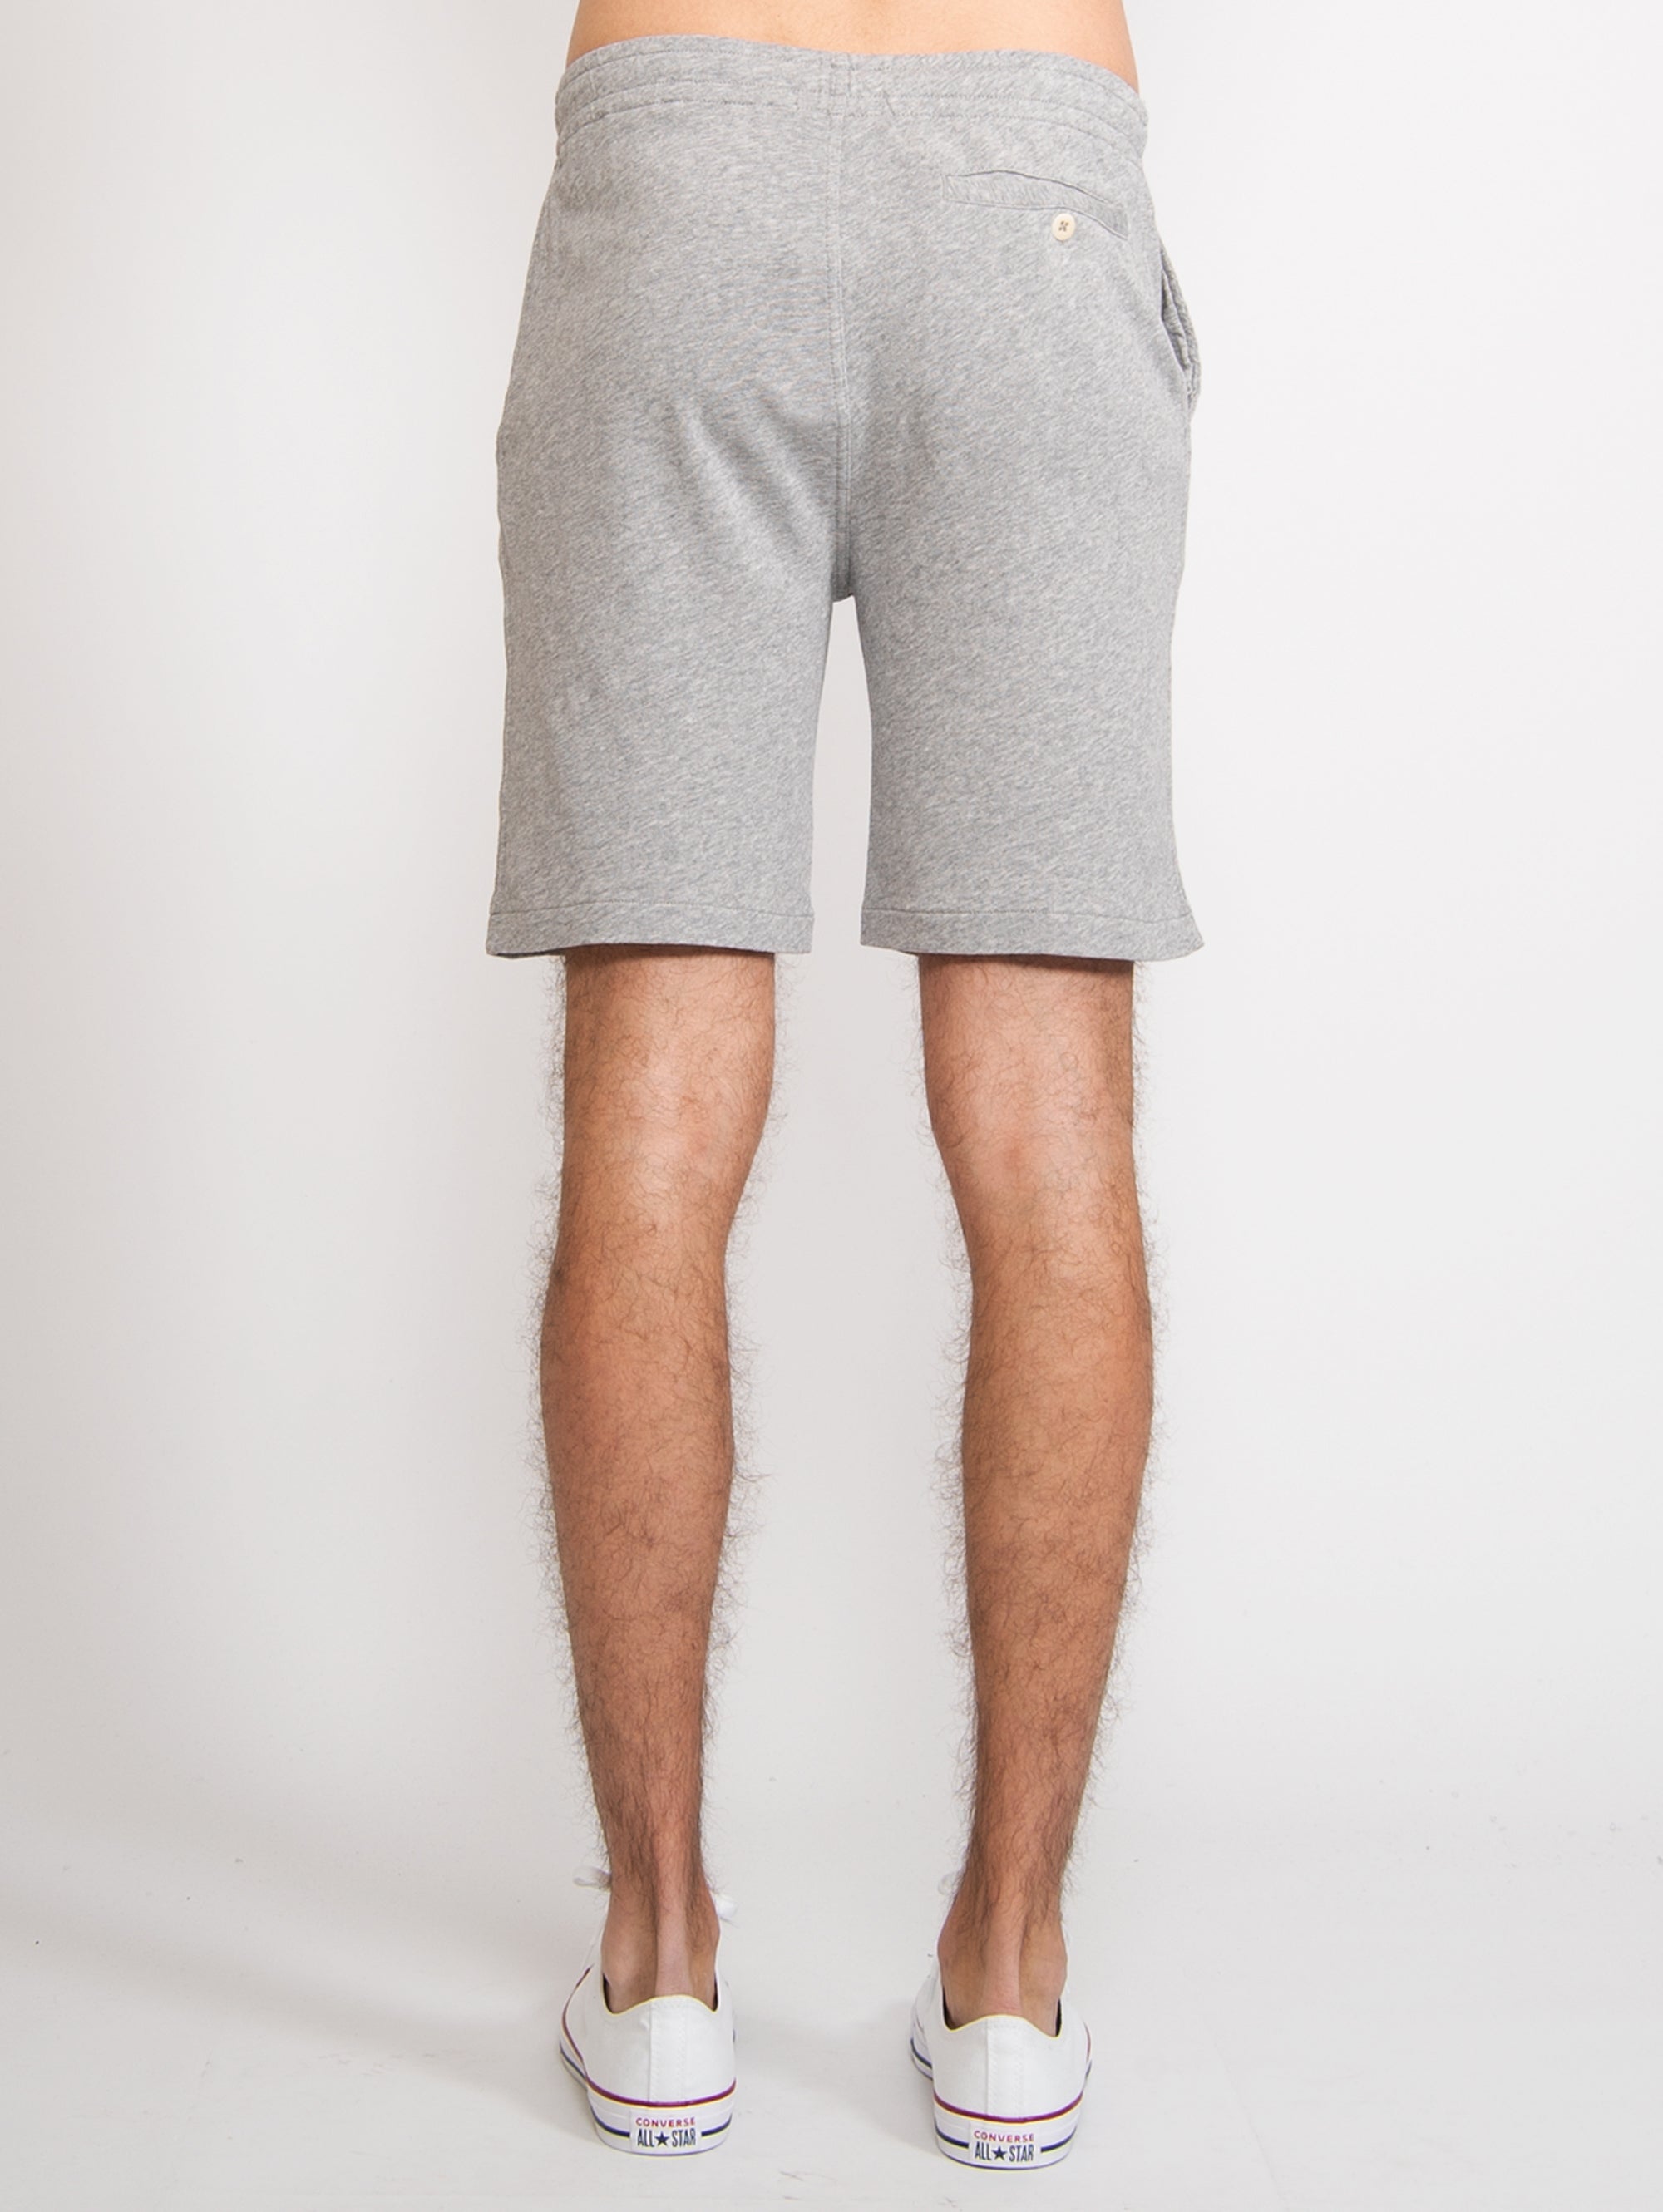 Graue Bermuda-Shorts aus Baumwolle